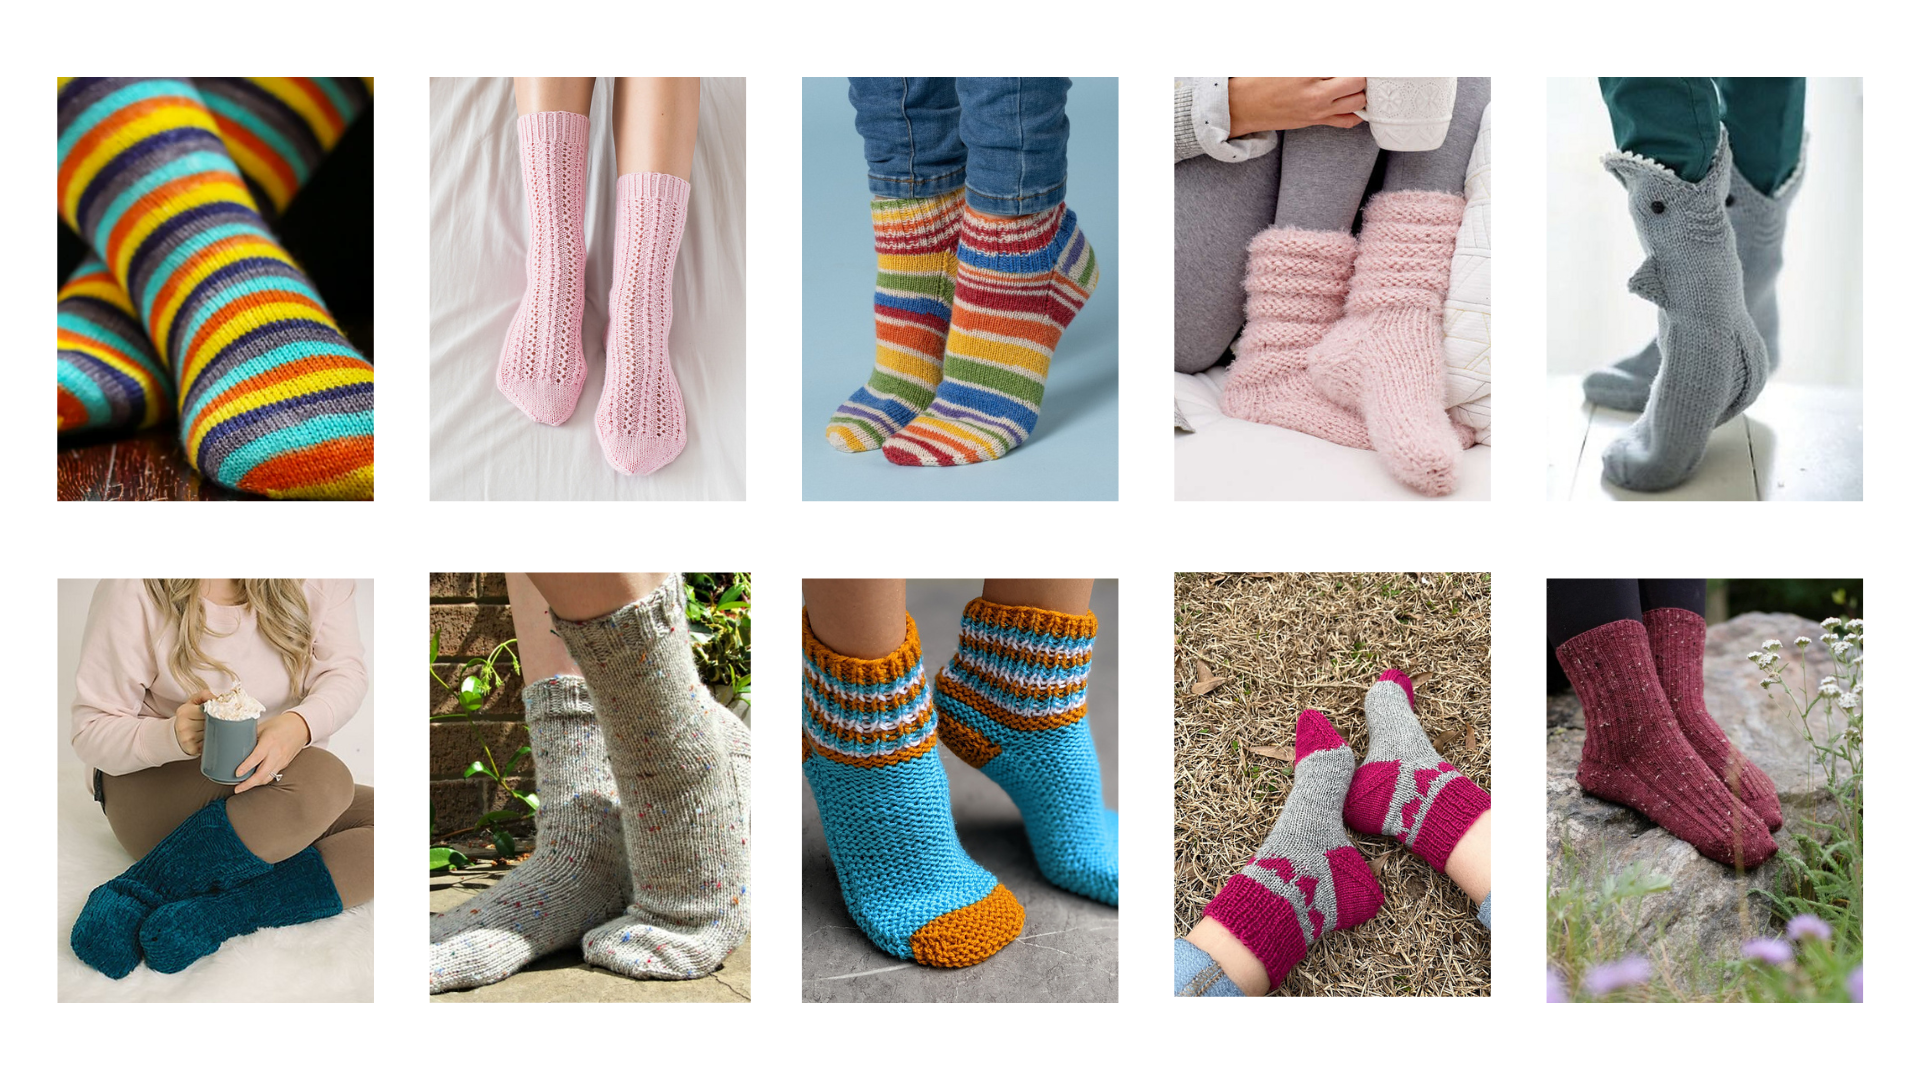 The Cozy Socks Knitting Pattern